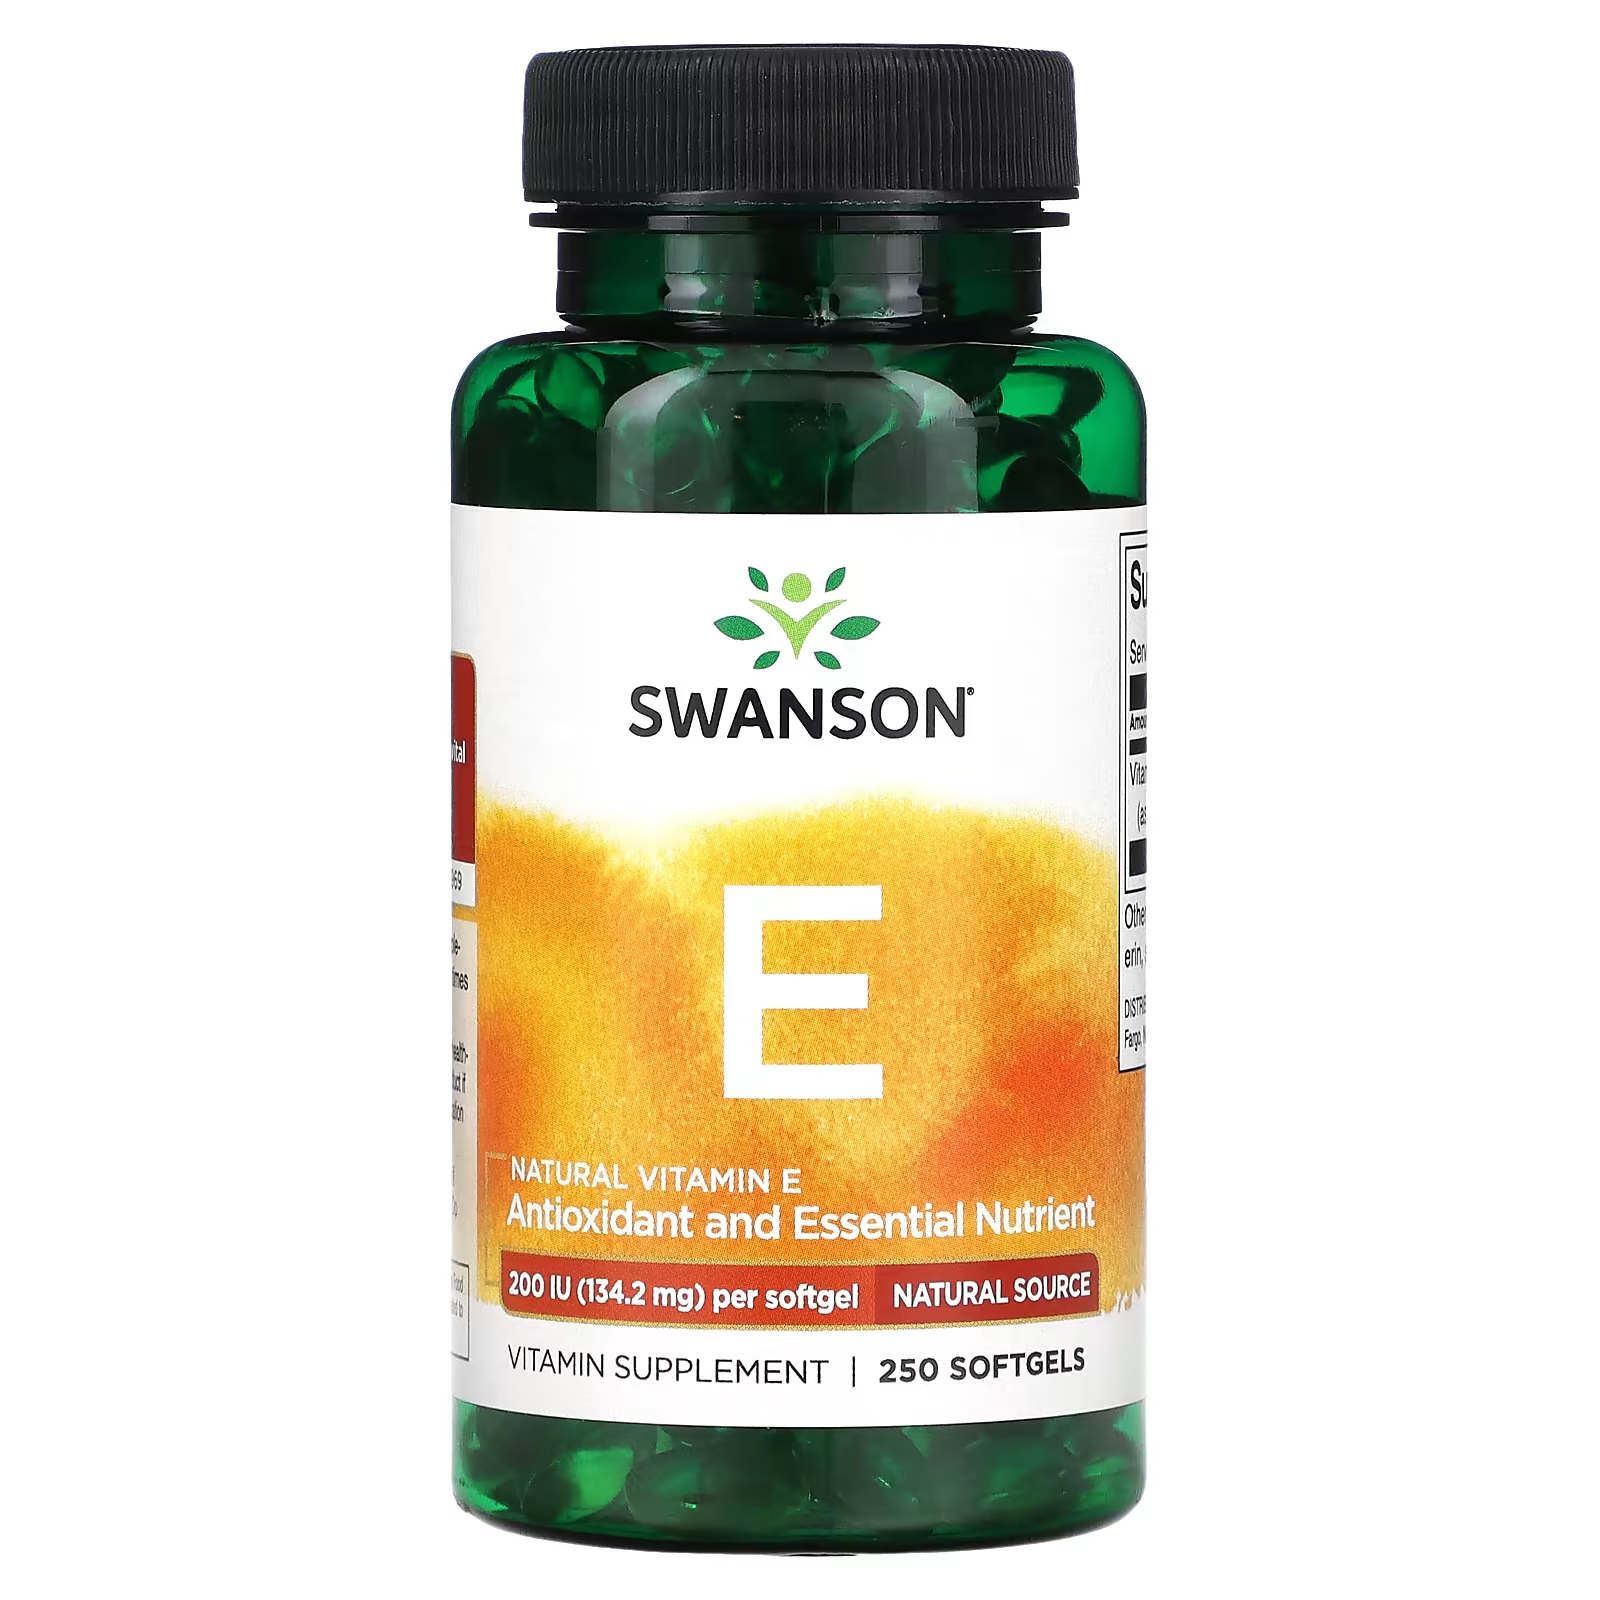 Витамин Е Swanson натуральный 200 МЕ, 134.2 мг 250 таблеток swanson витамин e натуральный источник 134 2 мг 200 ме 250 мягких таблеток